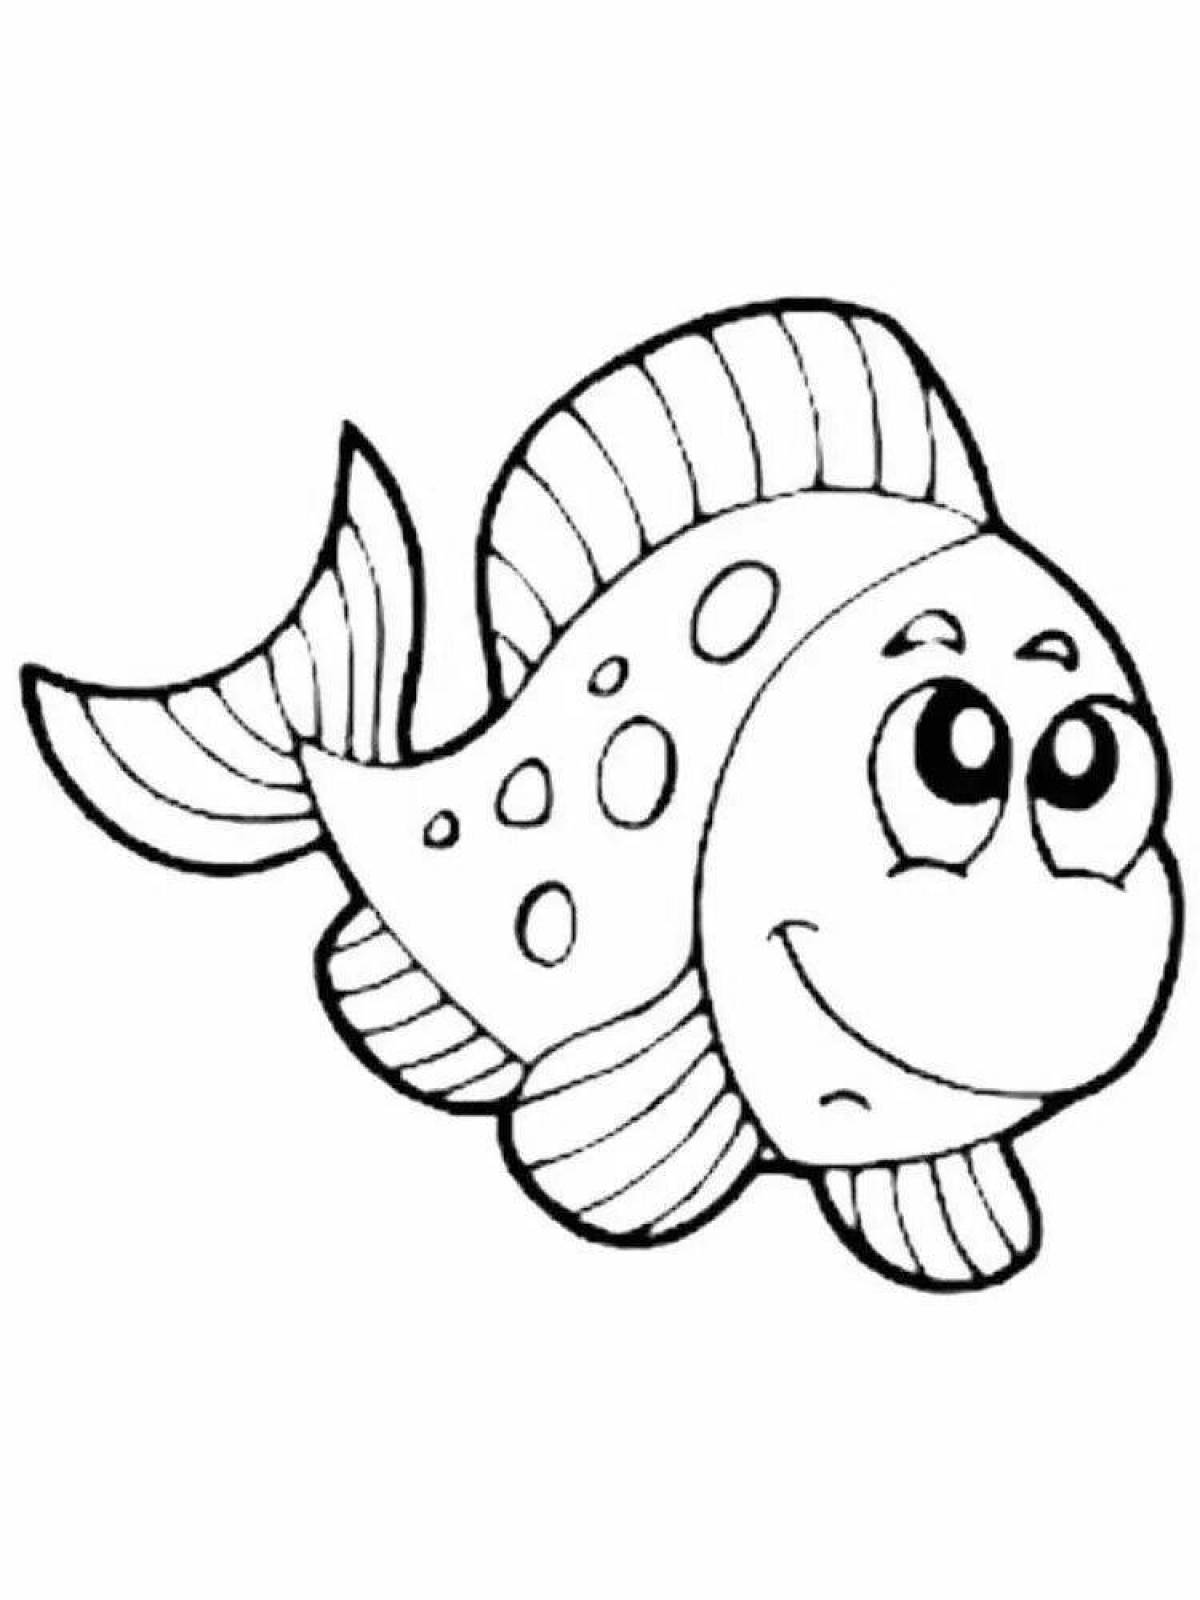 Раскраска рыбки для детей 5 6 лет. Раскраска рыбка. Рыбка раскраска для детей. Рыба раскраска для детей. Трафарет "рыбки".